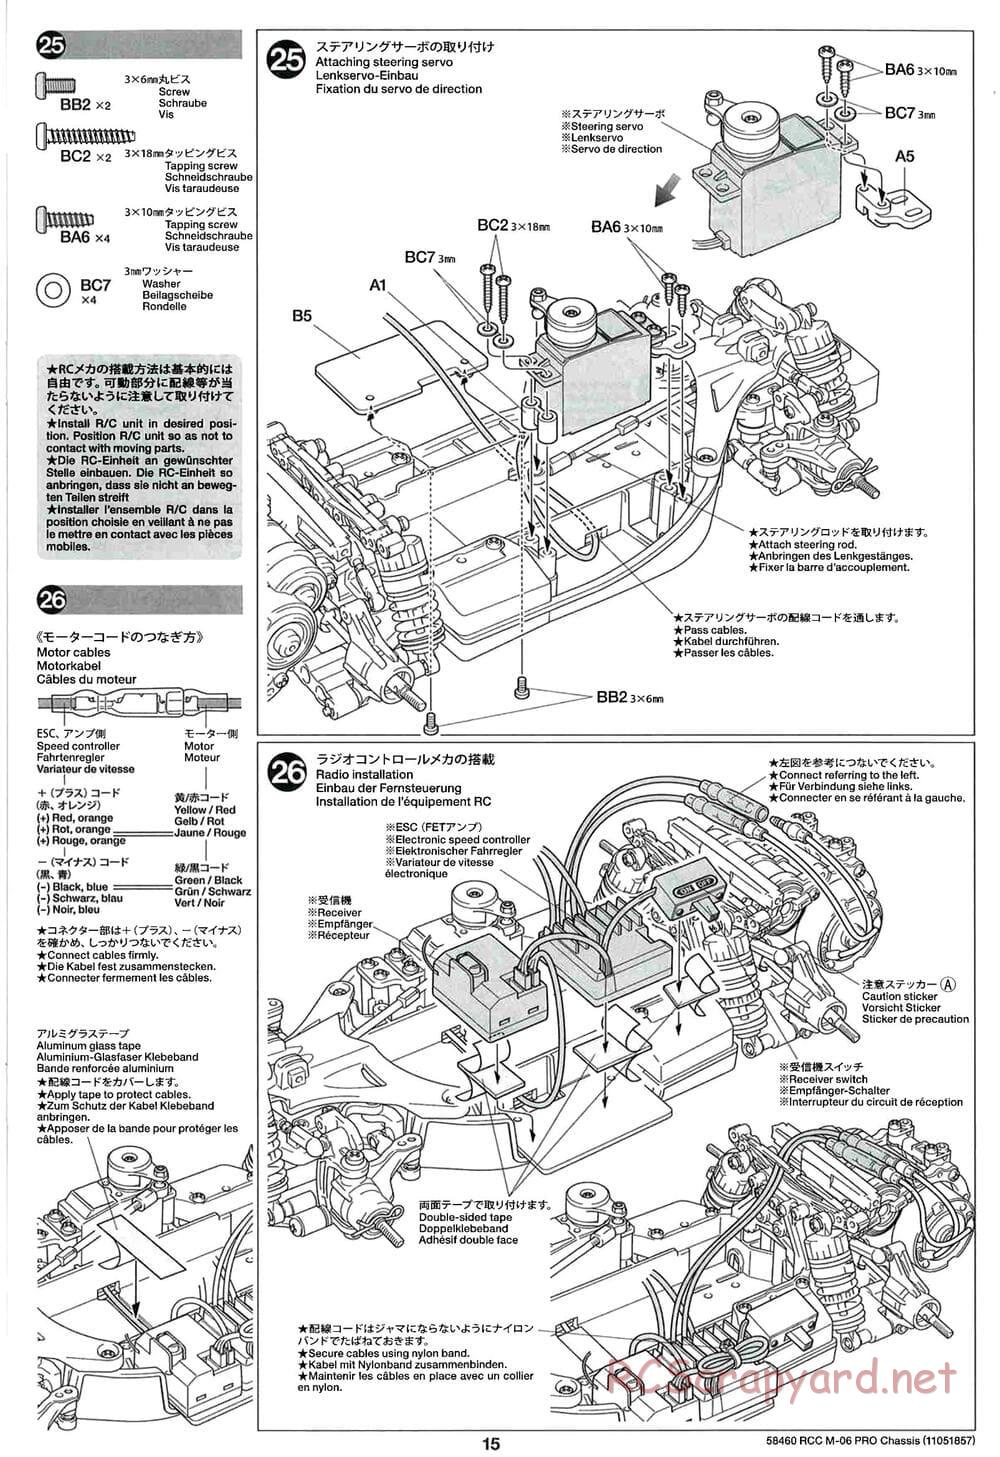 Tamiya - M-06 Pro Chassis - Manual - Page 15